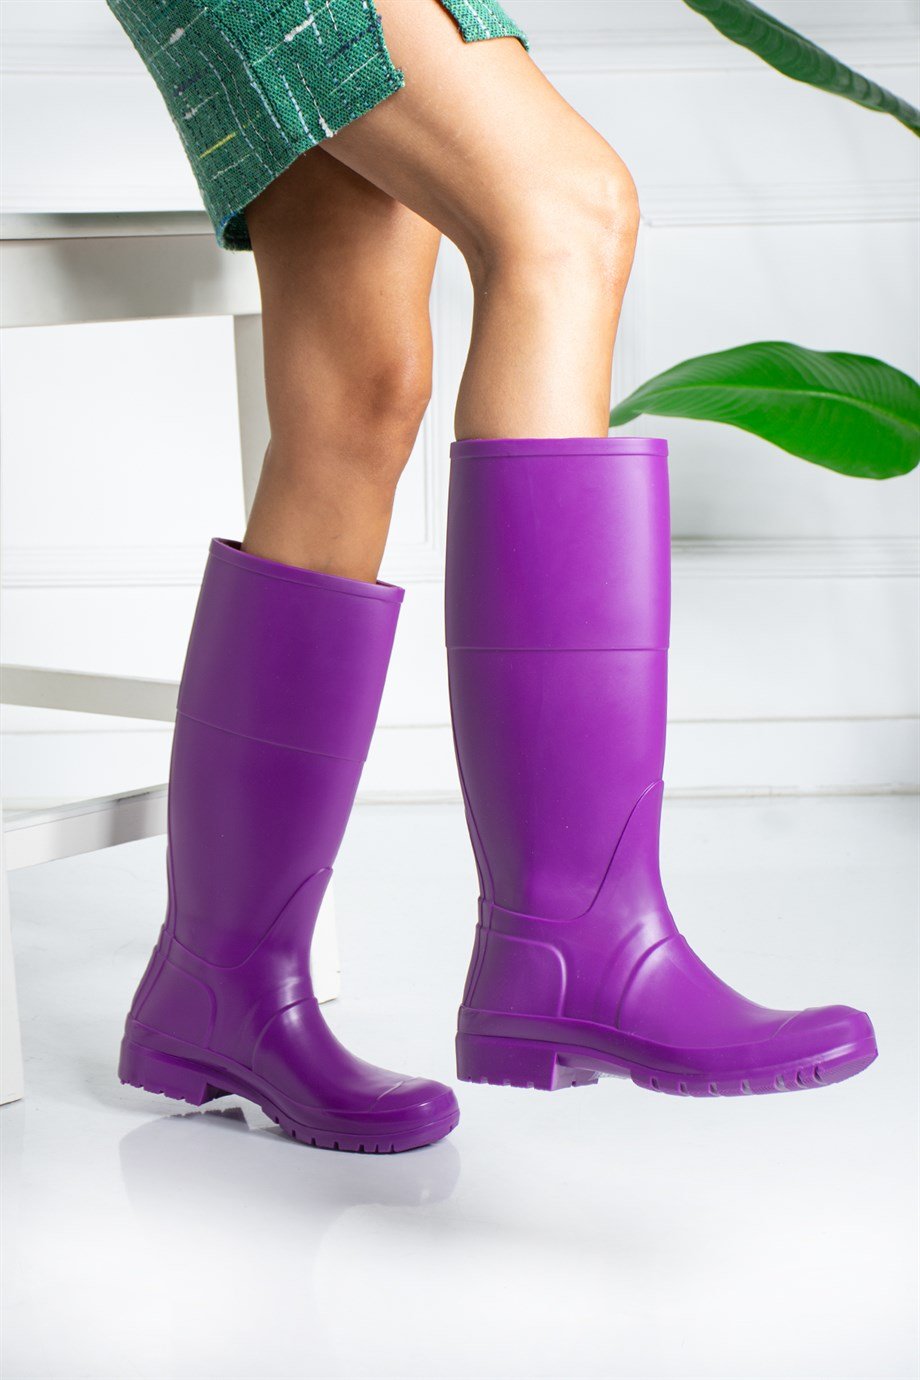 Hunterr Su Geçirmez Yağmur Çizmesi- Wolk Shoes